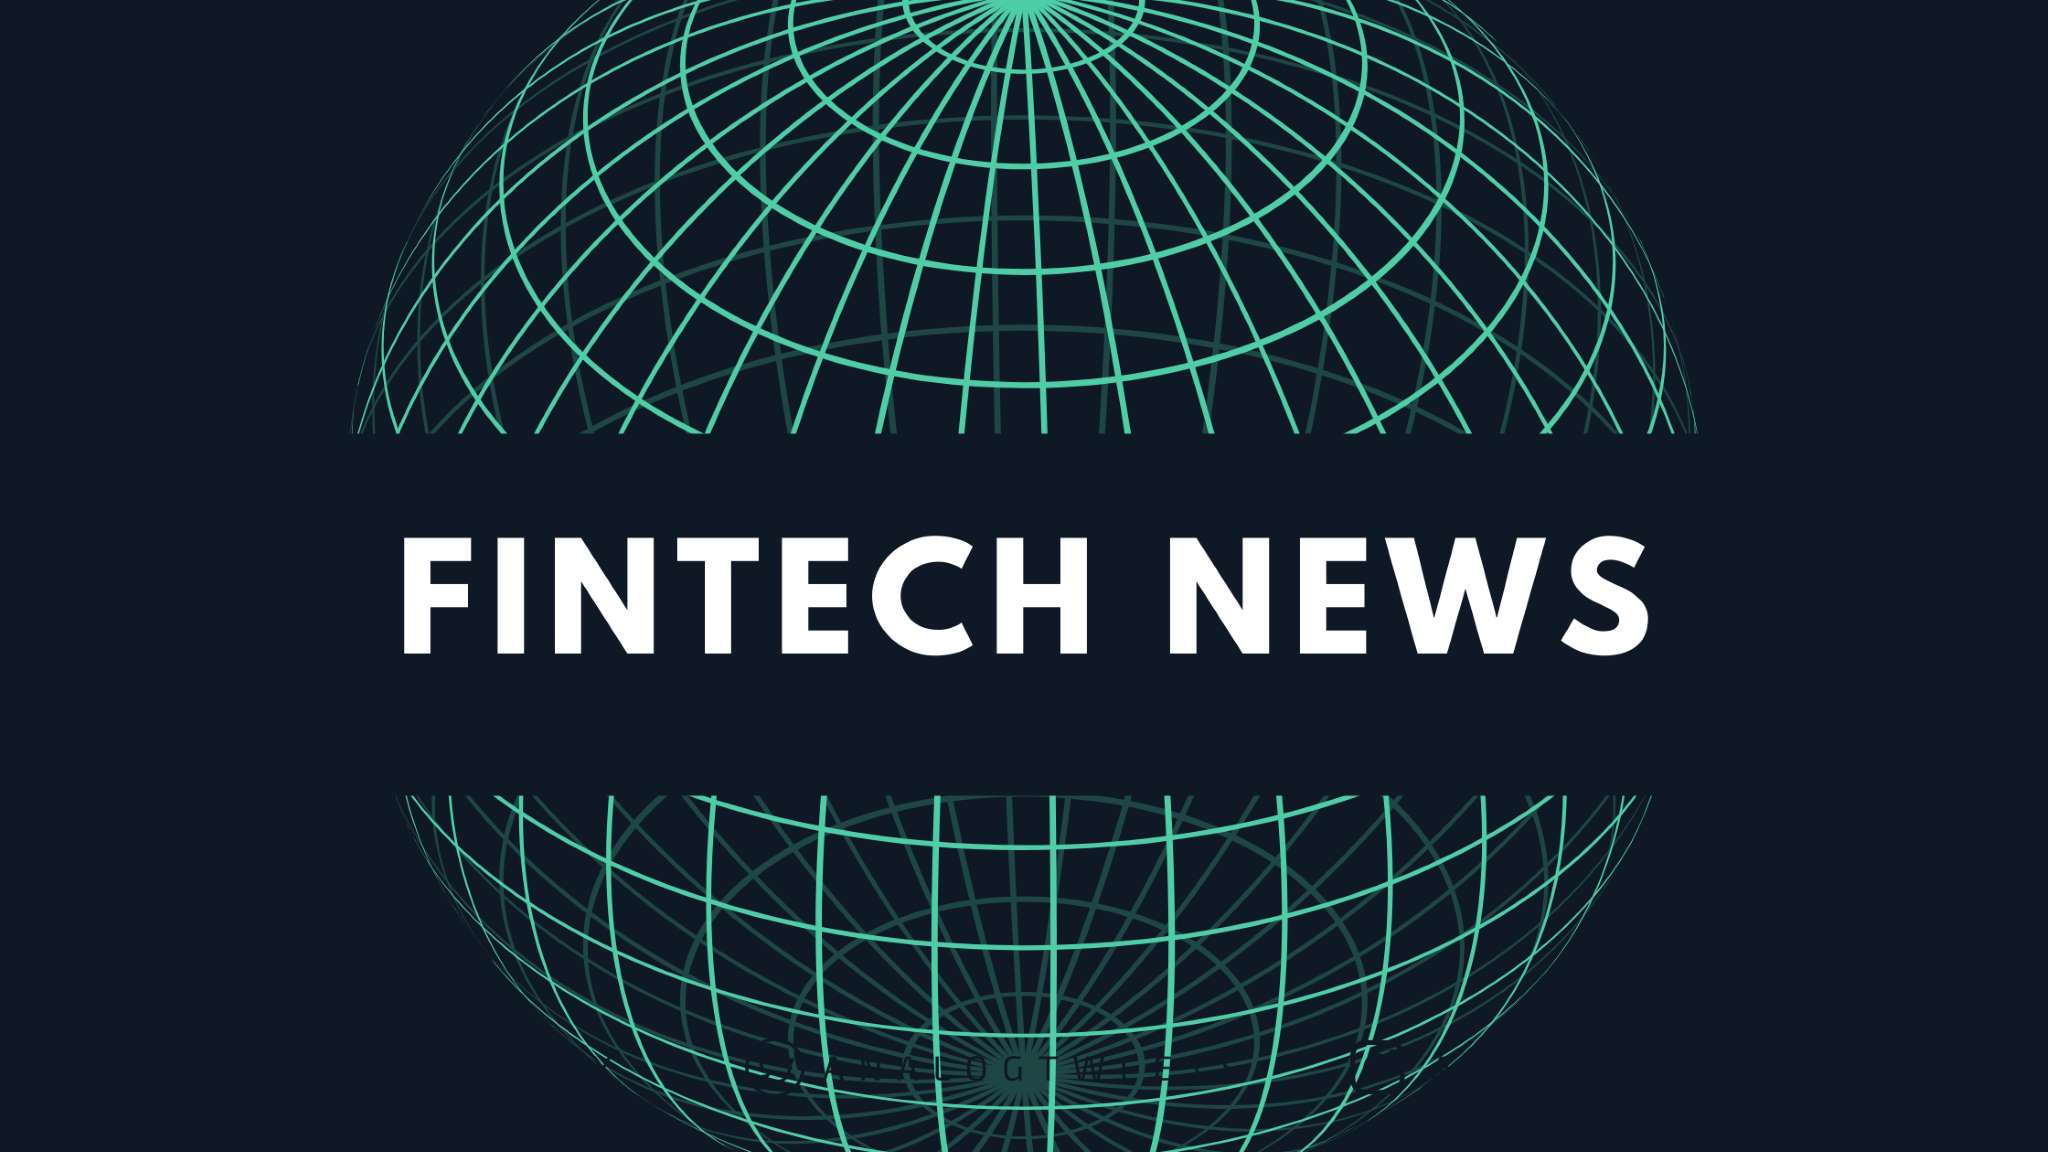 Top 10 Fintech News Stories for the Week Ending April 16, 2022